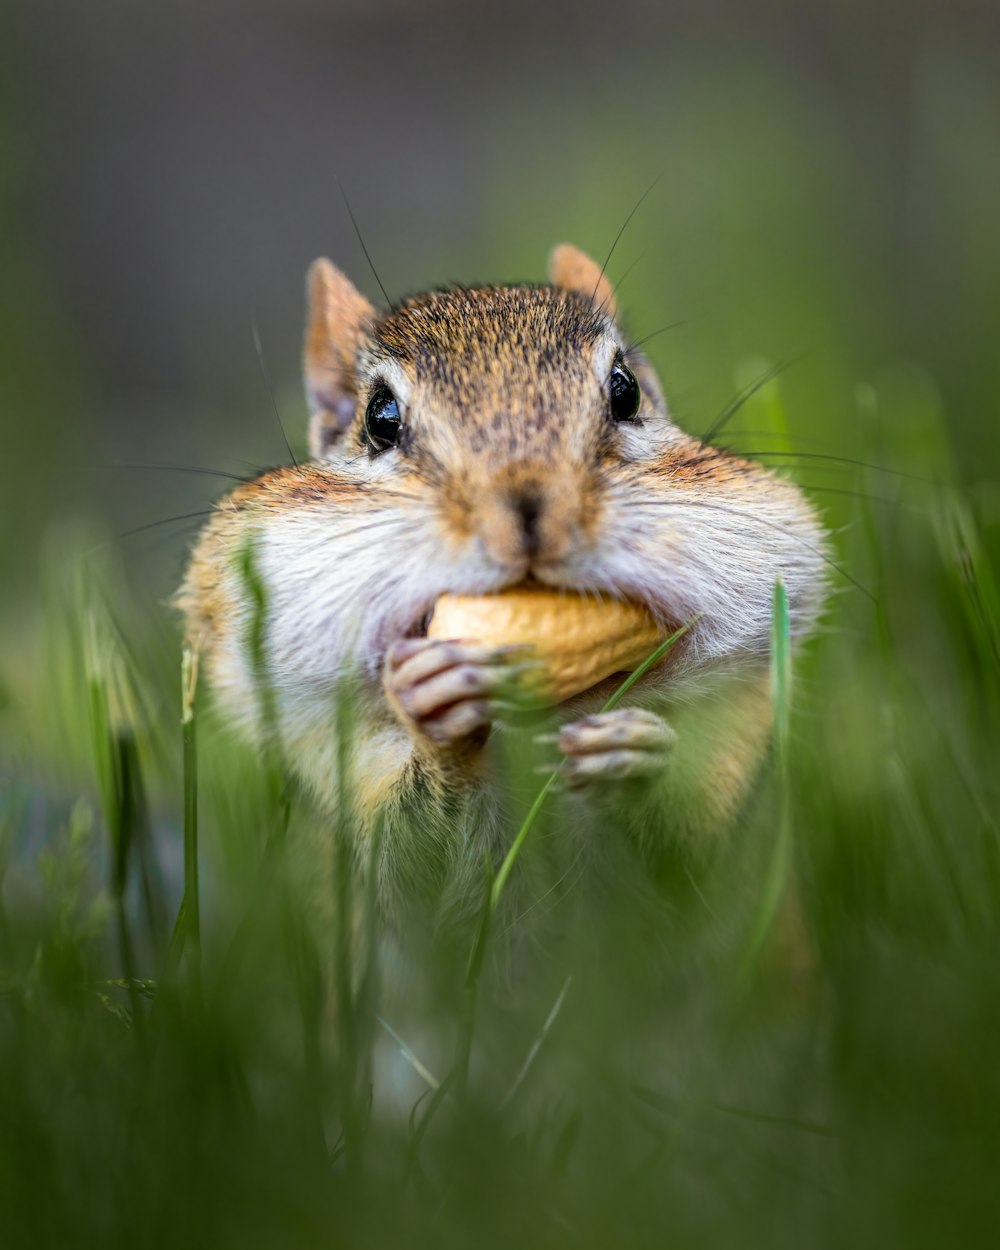 a squirrel holding a chipmunk